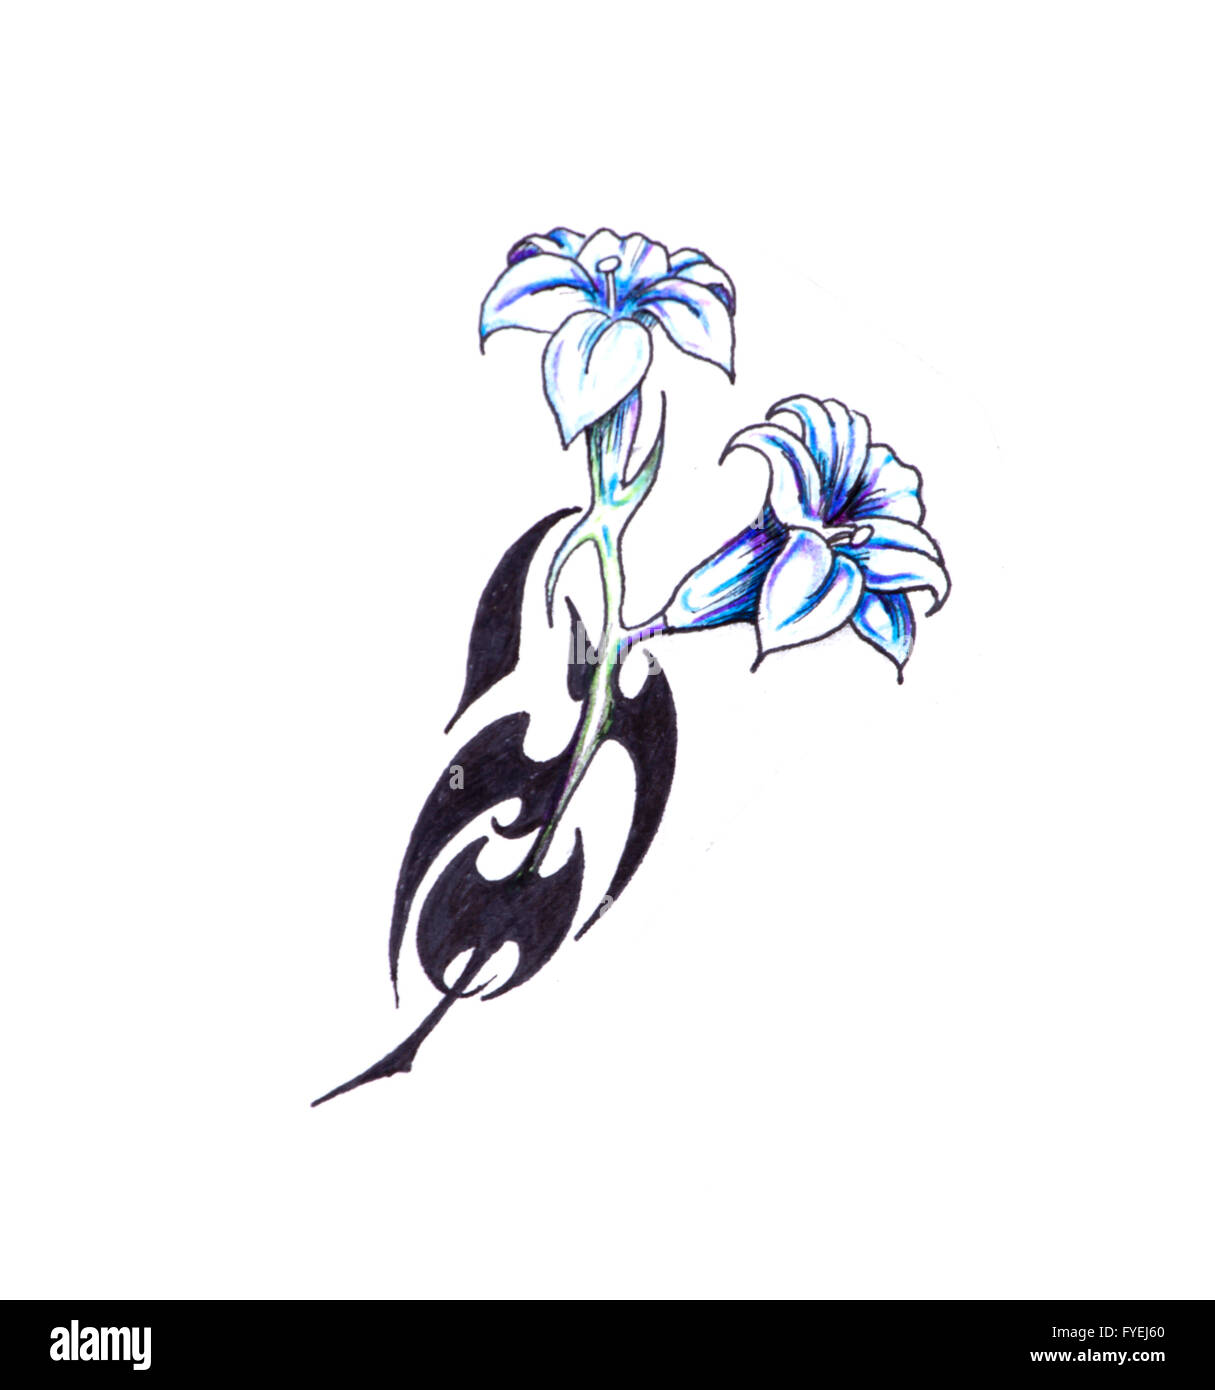 Sketch of tattoo art, flower with tribal design Stock Photo - Alamy